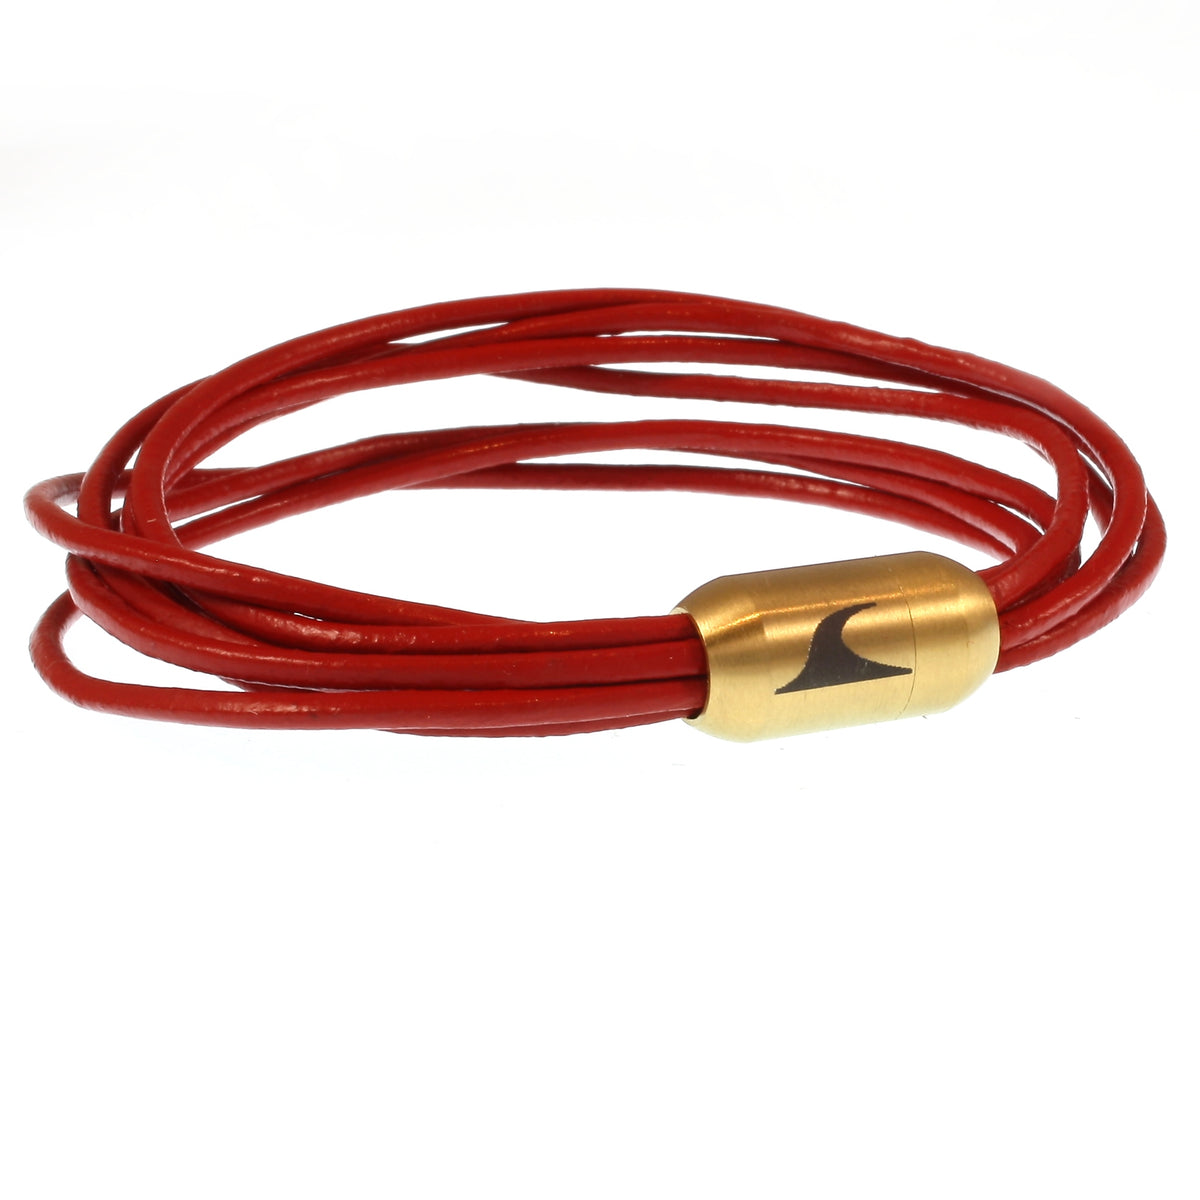 Damen-Leder-armband-fem-rot-gold-Edelstahlverschluss-vorn-wavepirate-shop-r